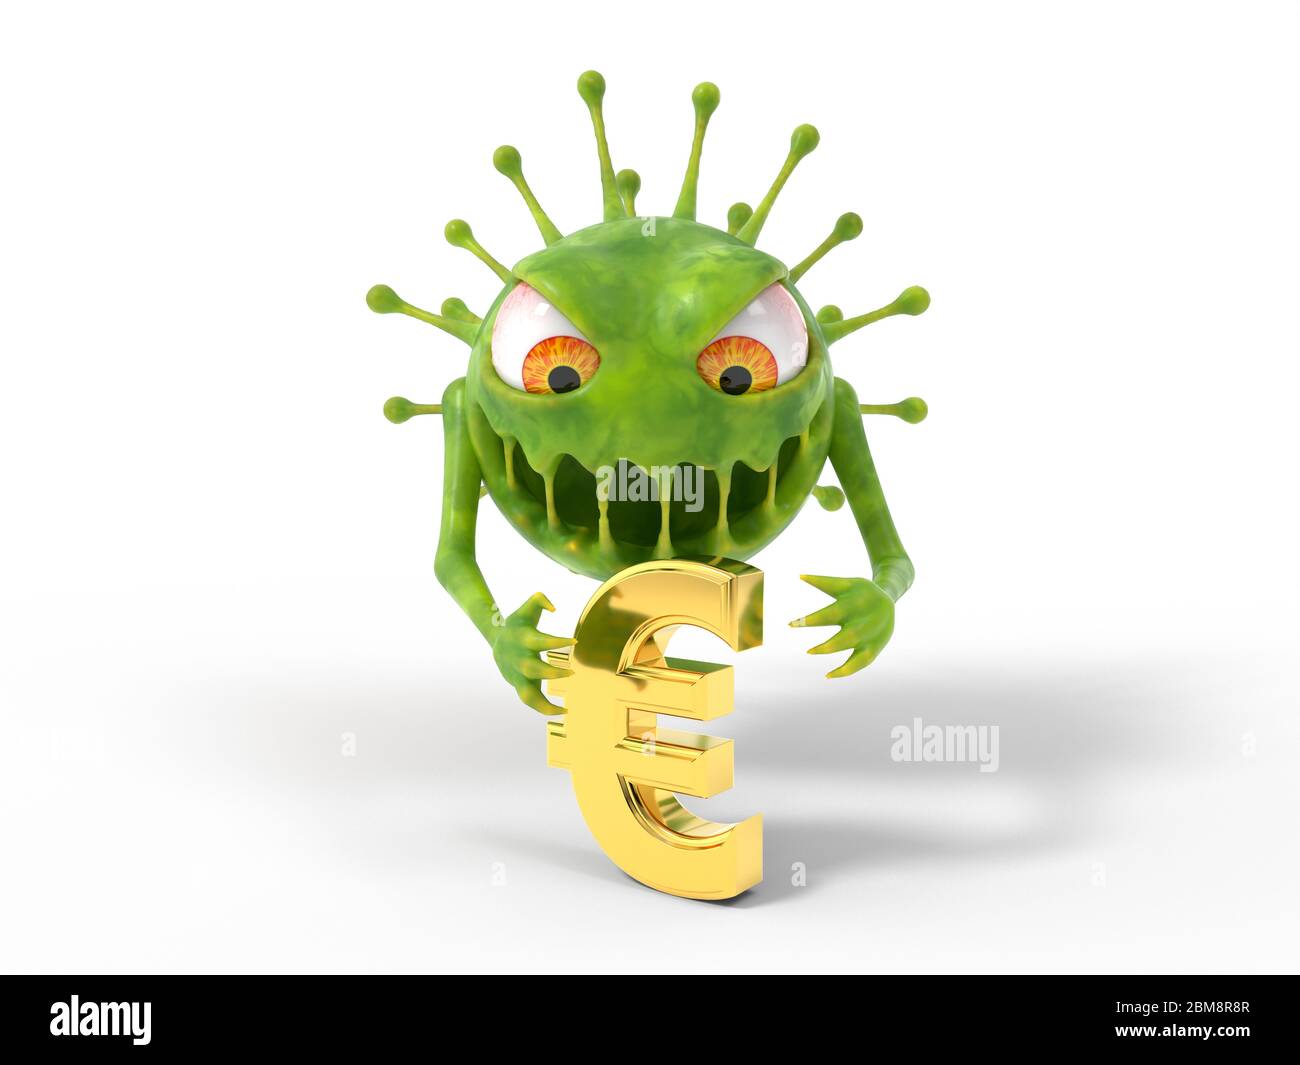 corona Virus Monster Angriffe auf Euro-Zeichen. Geeignet für covid-19, Corona und andere Virus Themen. 3D-Illustration, Cartoon Virus Charakter Stockfoto